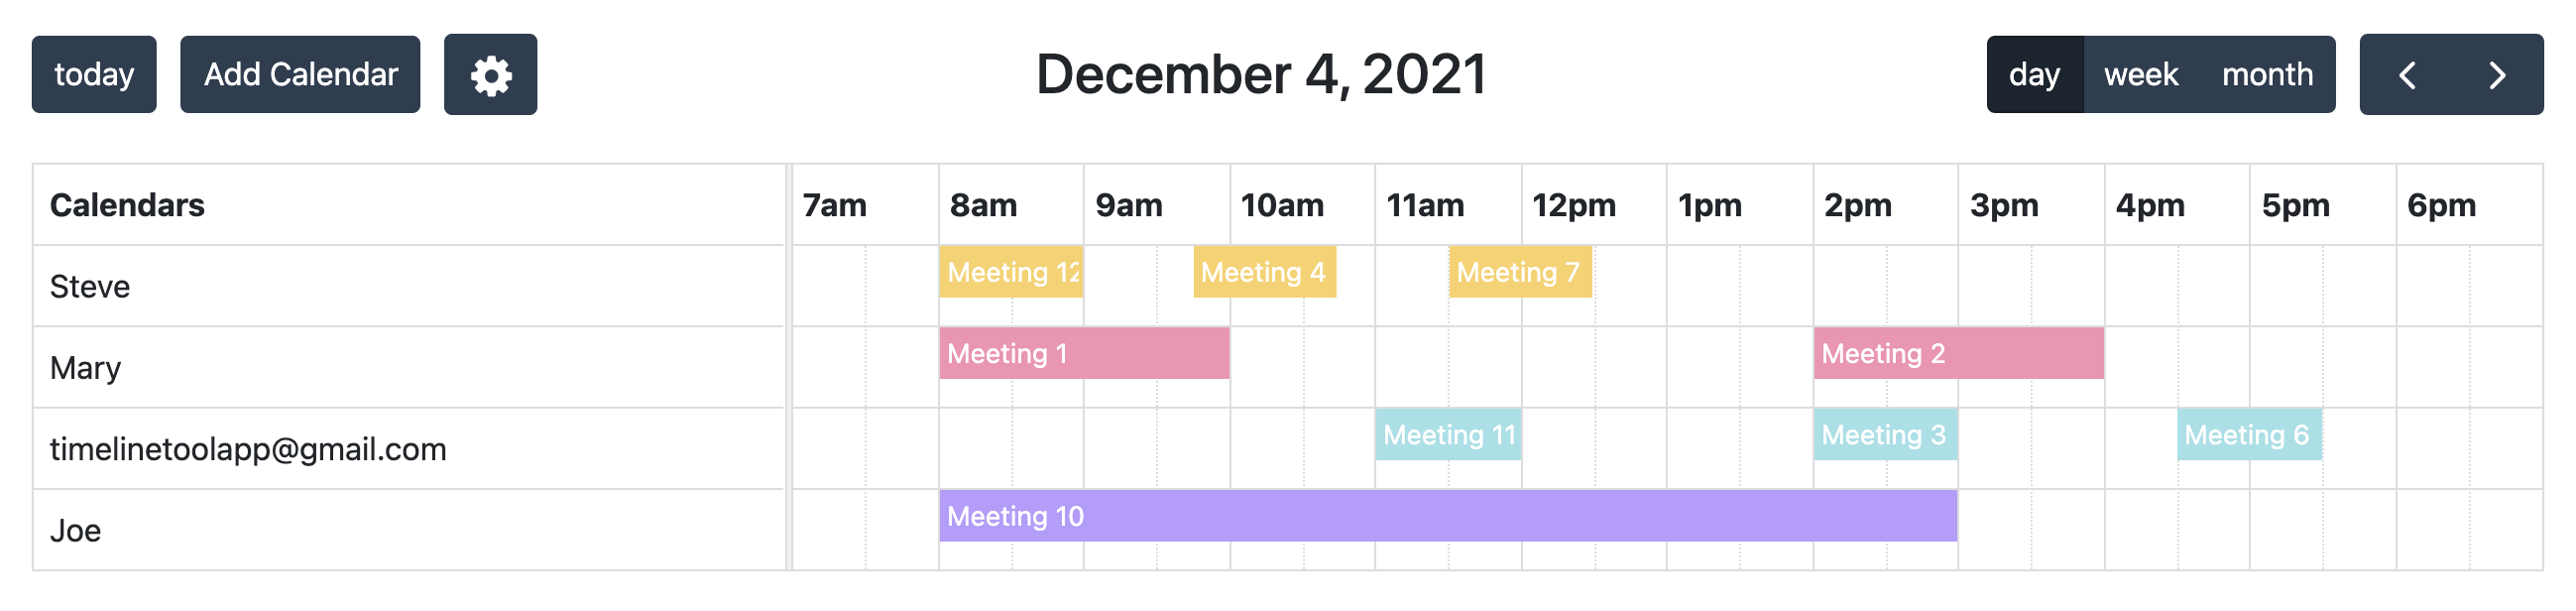 Google Calendar Timeline Schedule